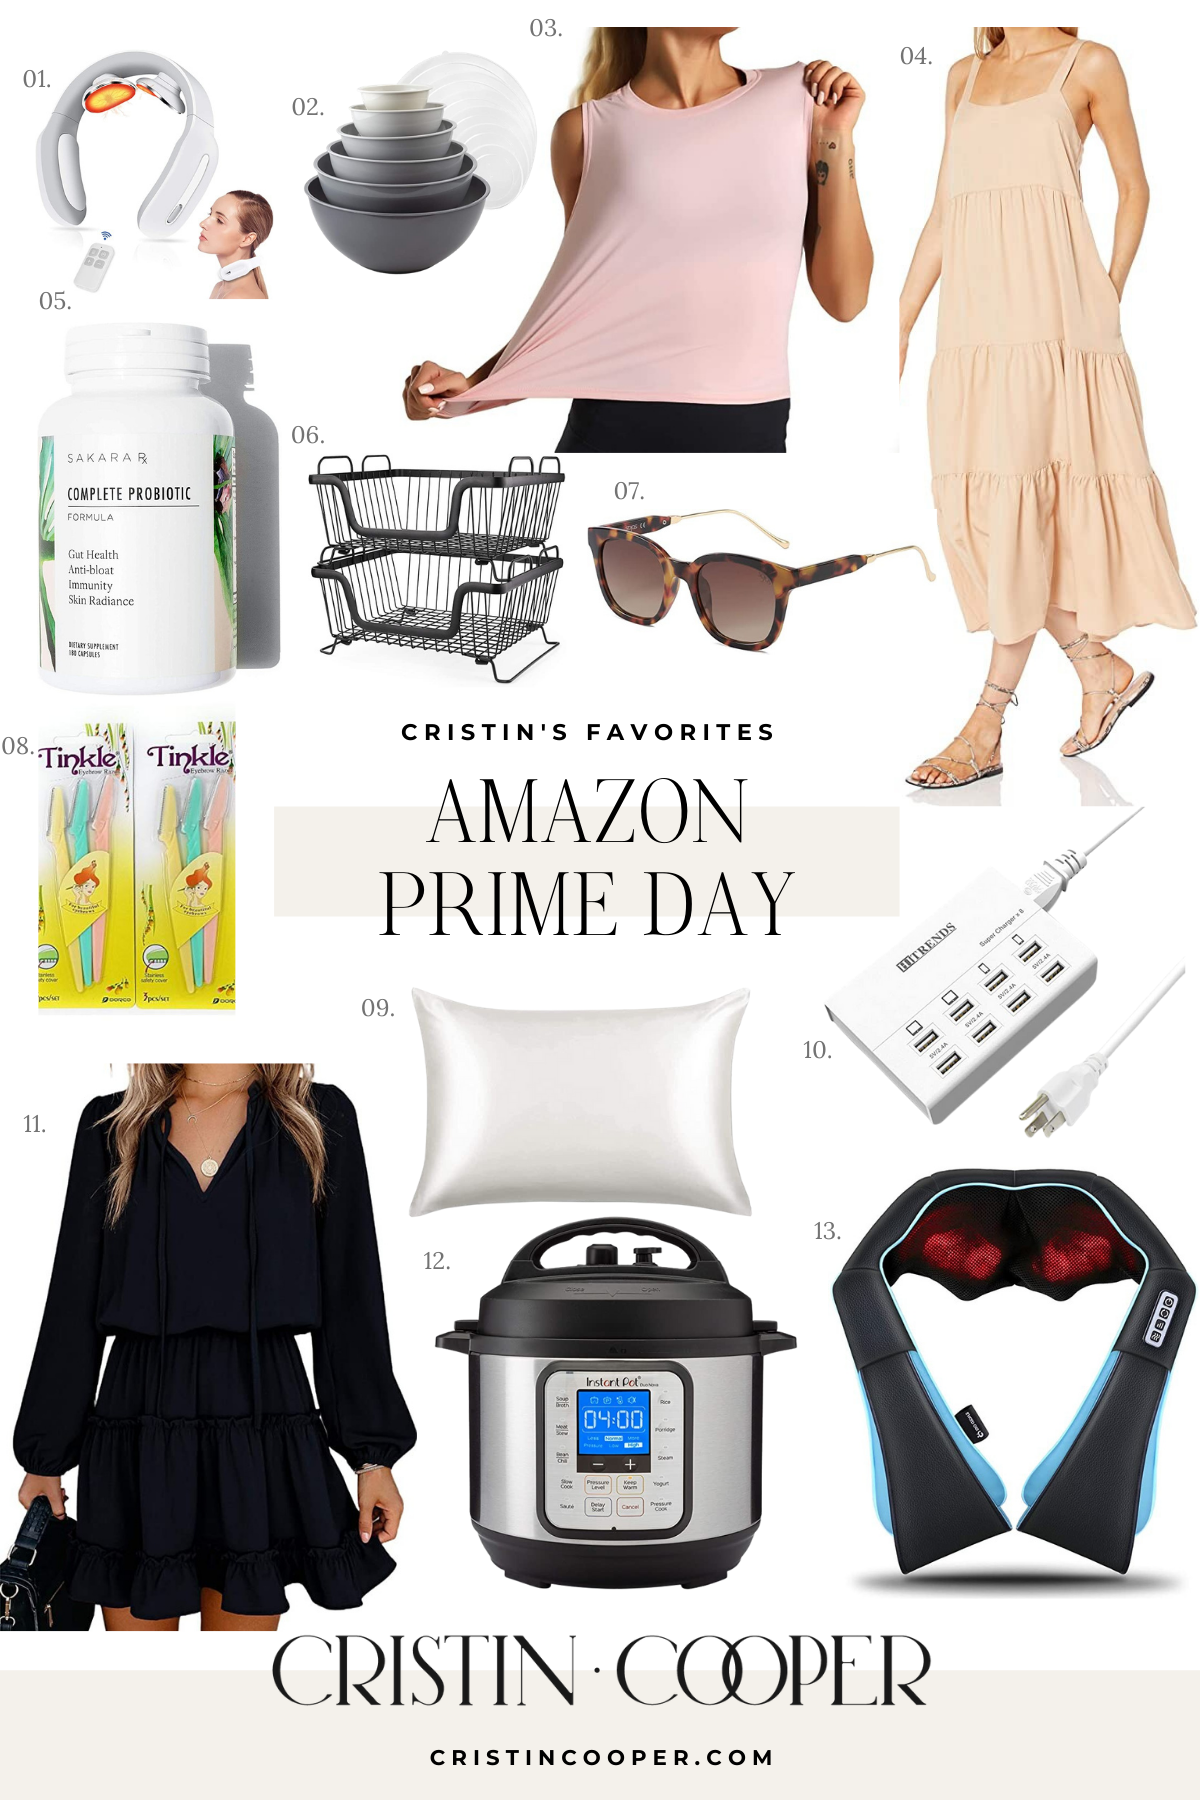 Amazon Prime Day - Cristin's Favorites